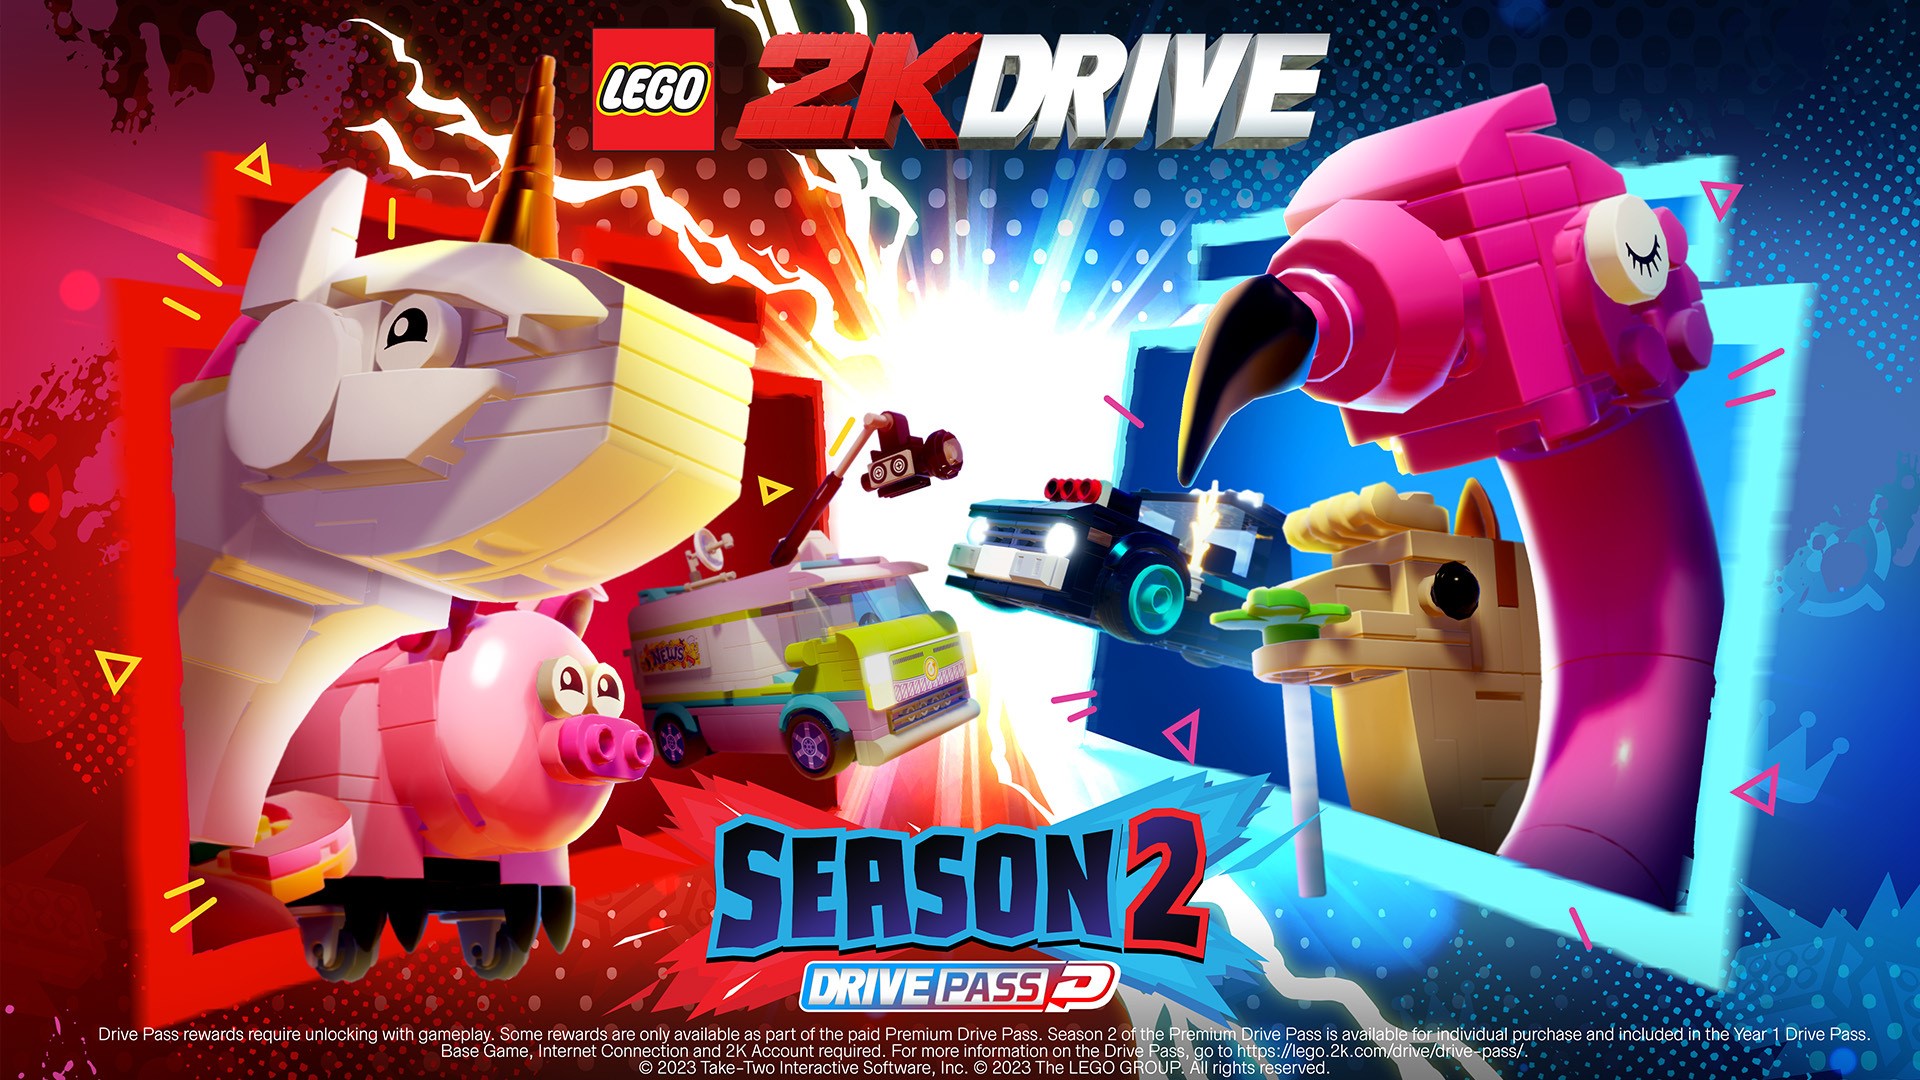 LEGO 2K Drive Announces Drive Pass Season 2 Arriving Tomorrow